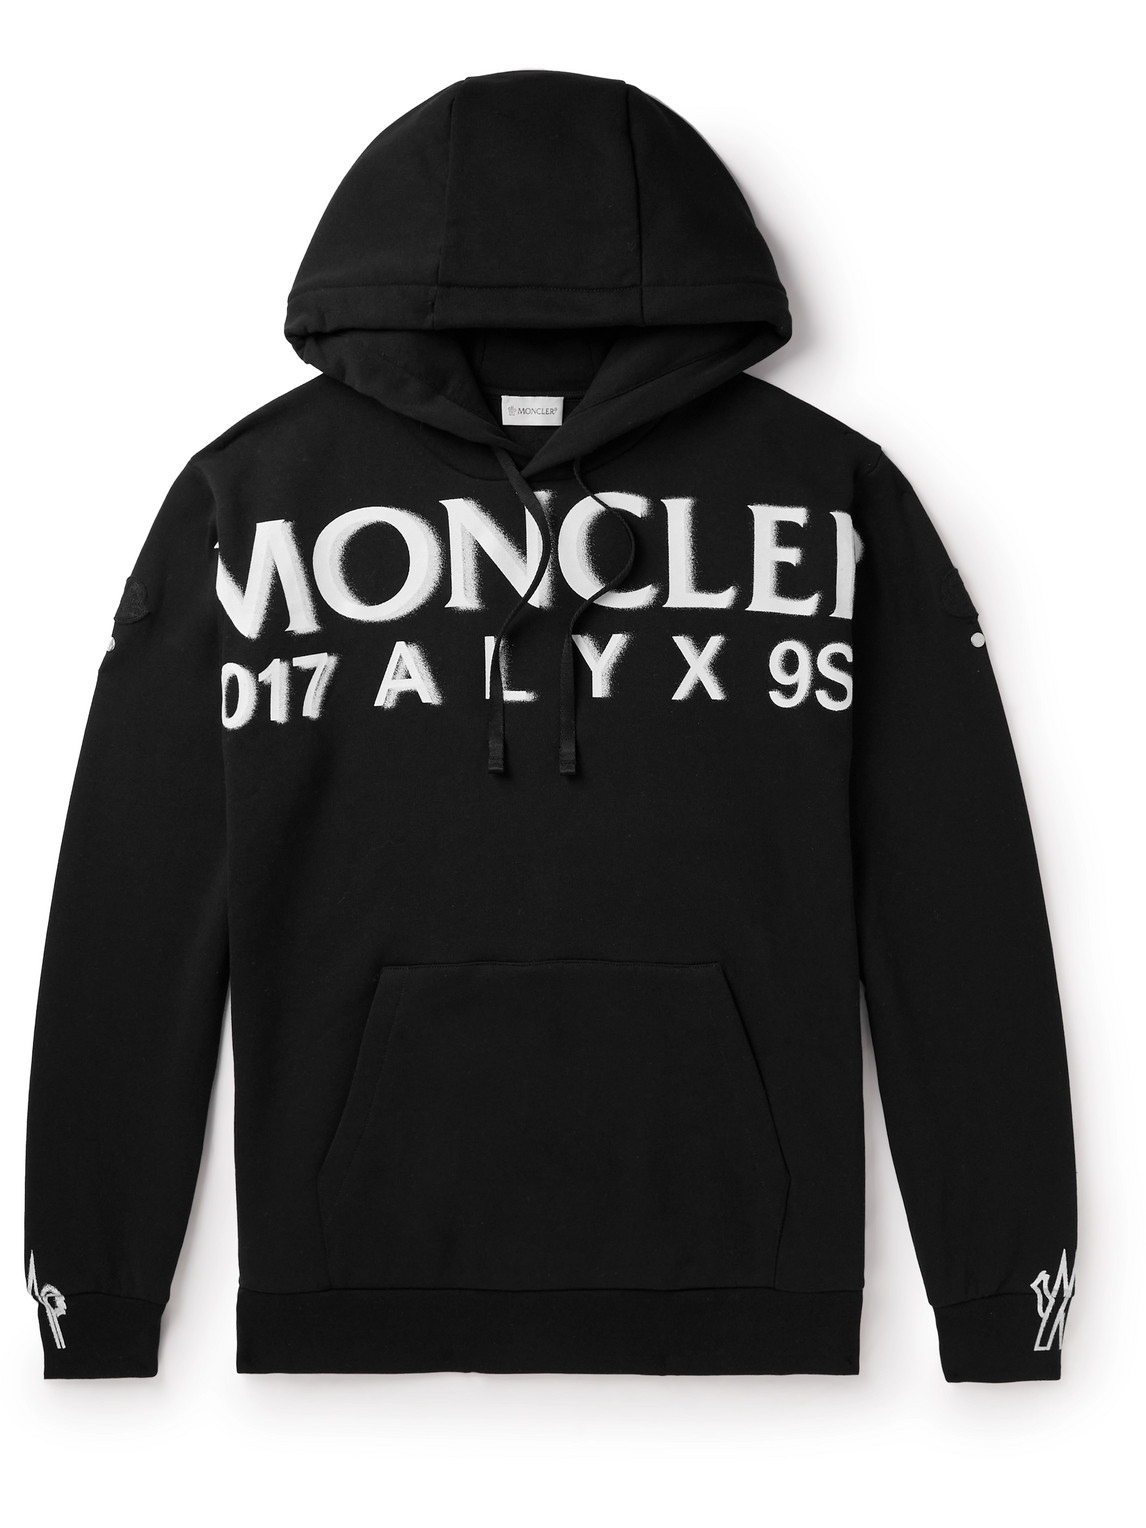 Moncler Genius 6 Moncler 1017 ALYX 9SM Logo-Print Cotton-Blend Jersey Hoodie